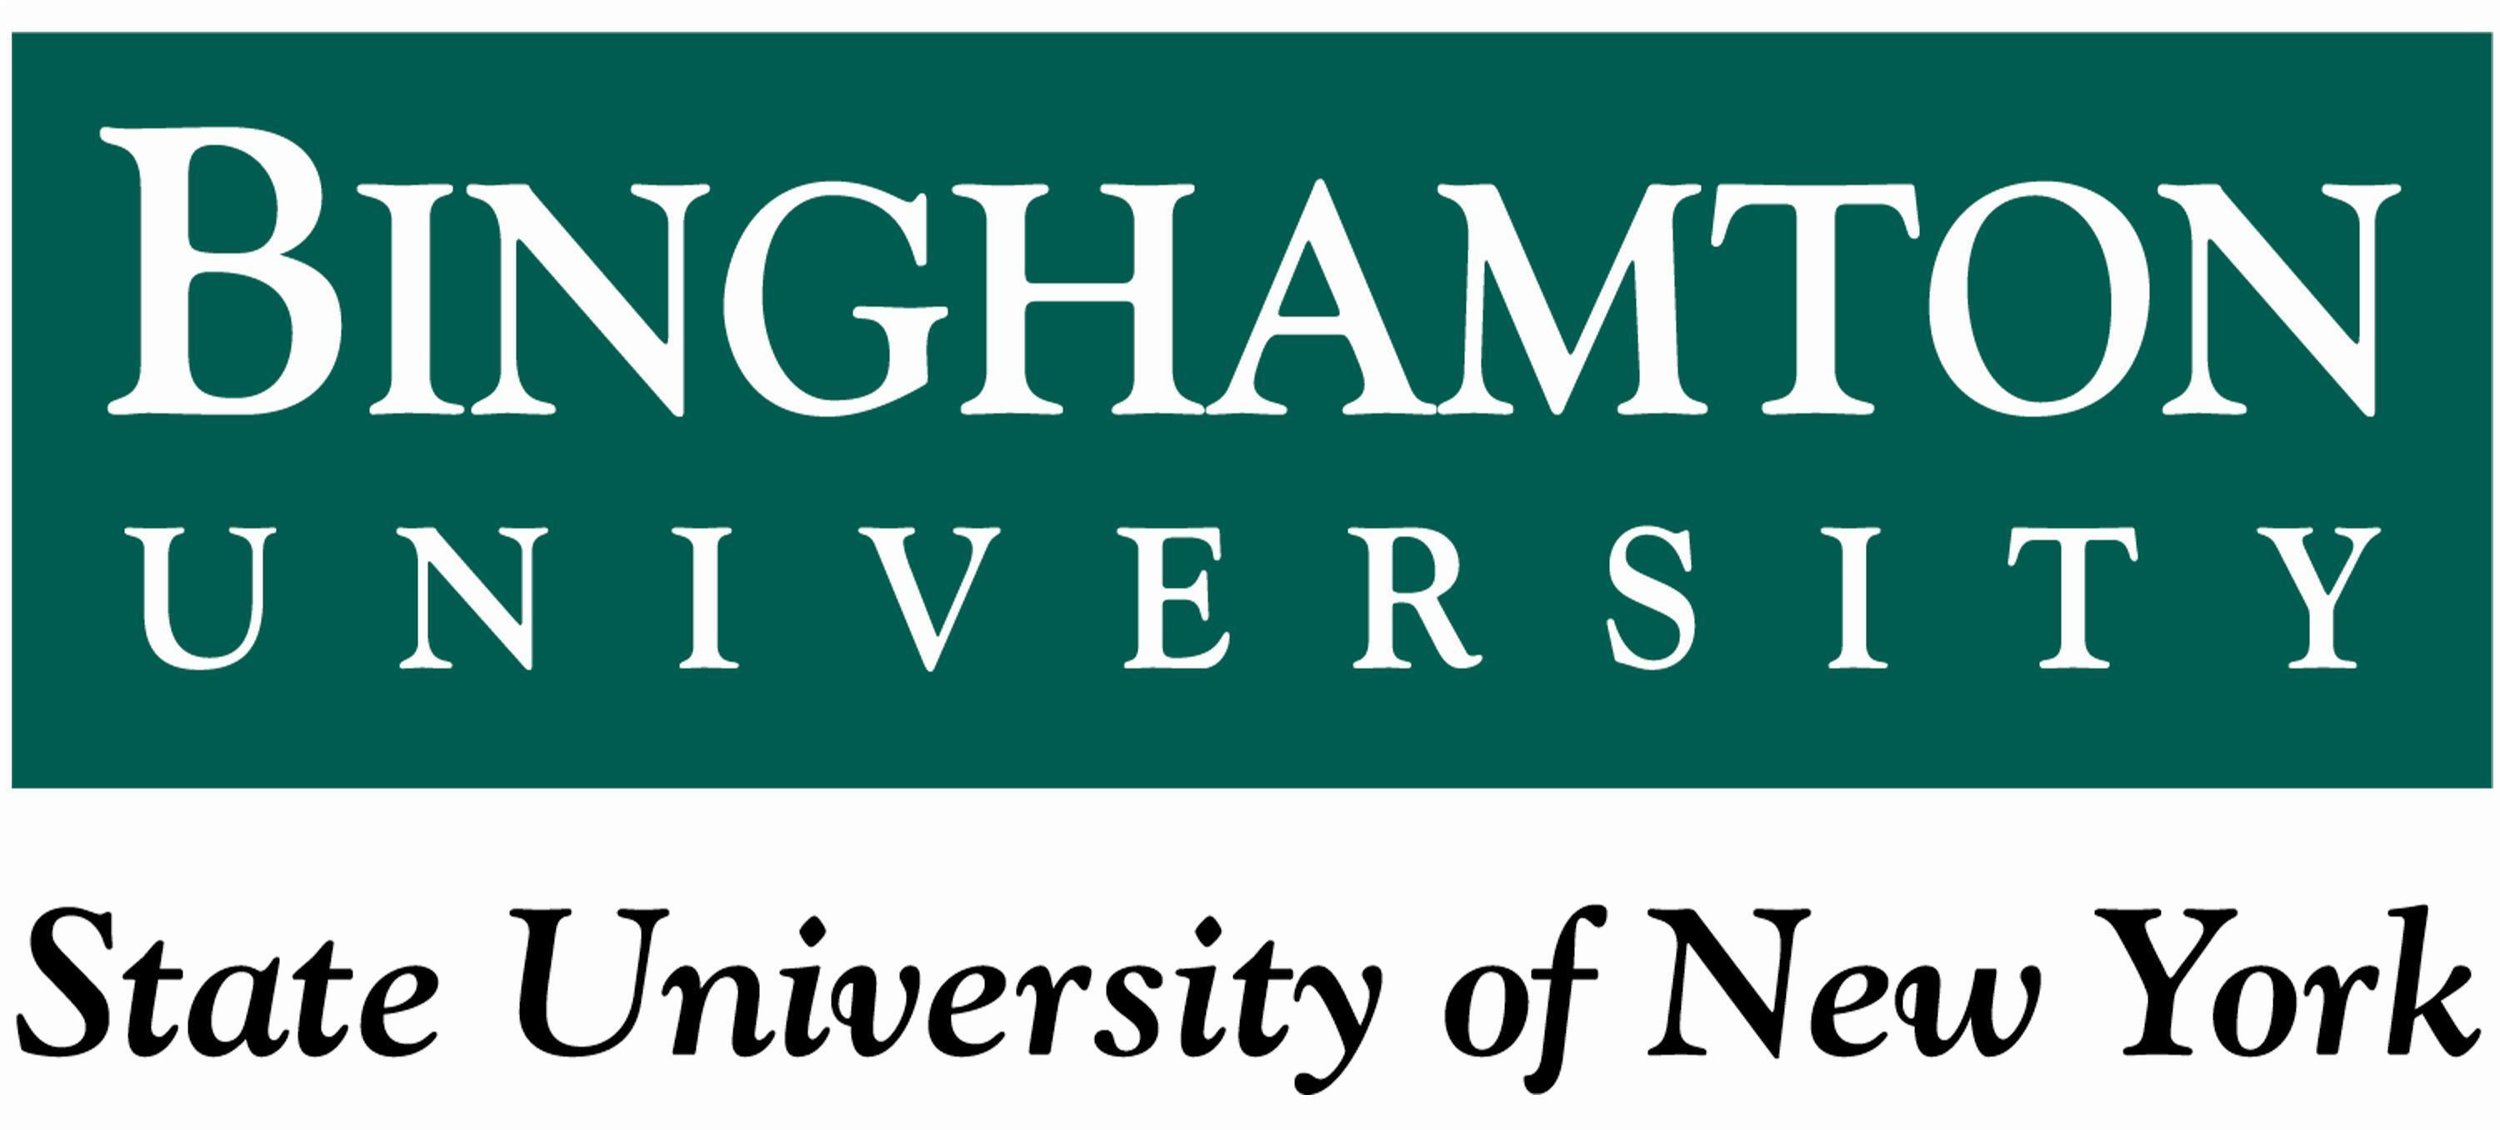 Binghamton_University_State_University_of_New_York_logo_(7).jpg